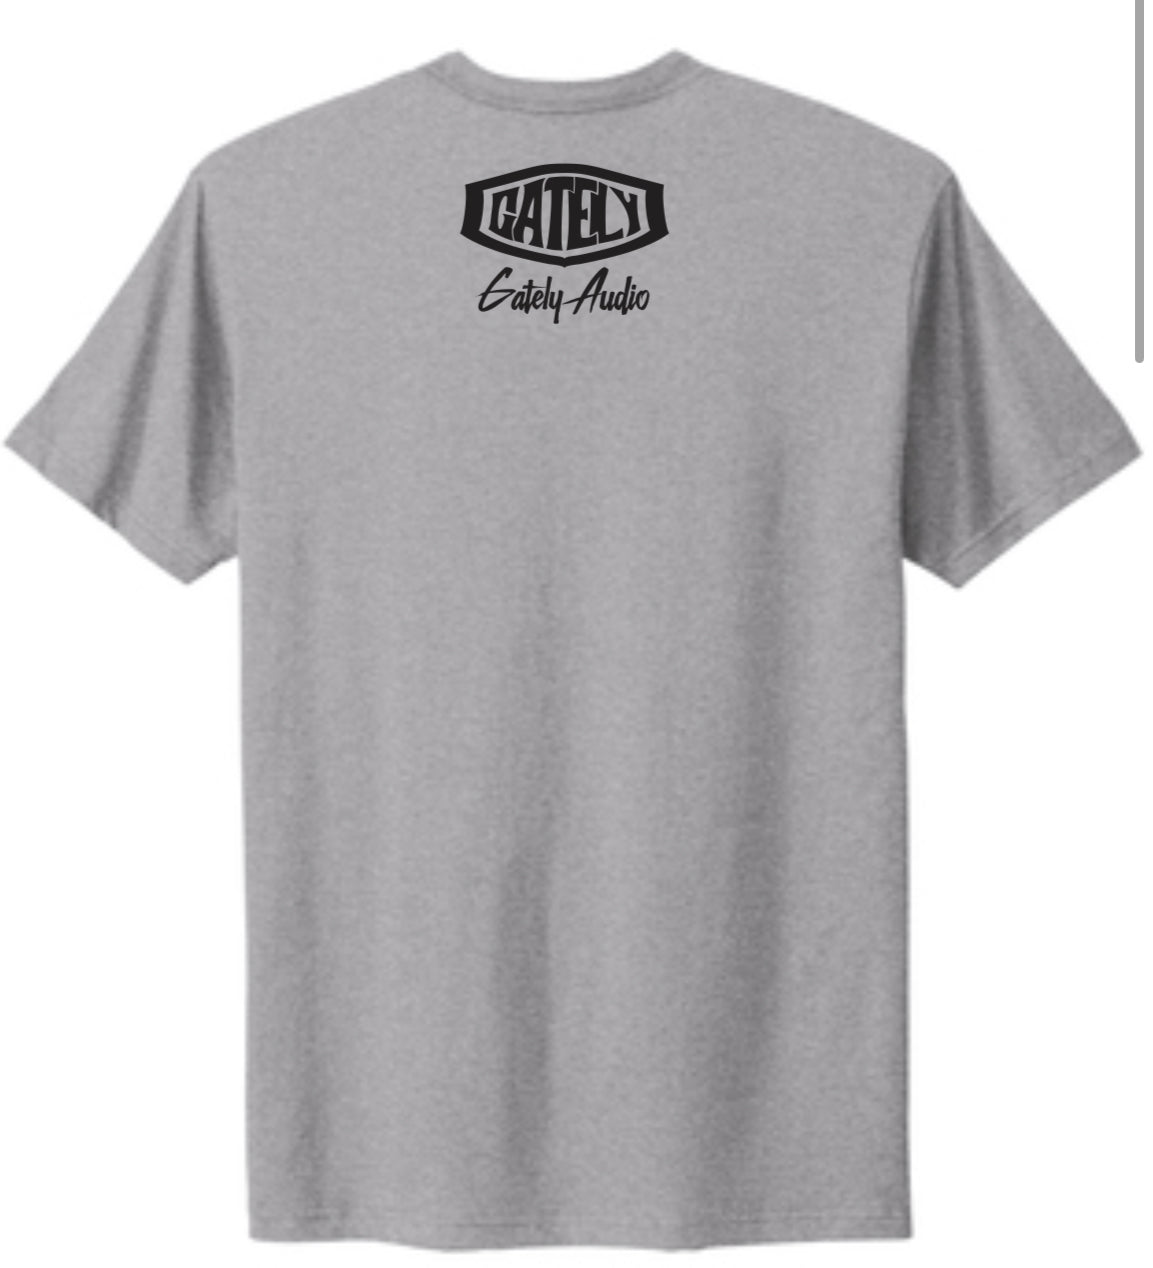 Gately BuildTestTuneDemoRepeat  T-Shirt in Grey